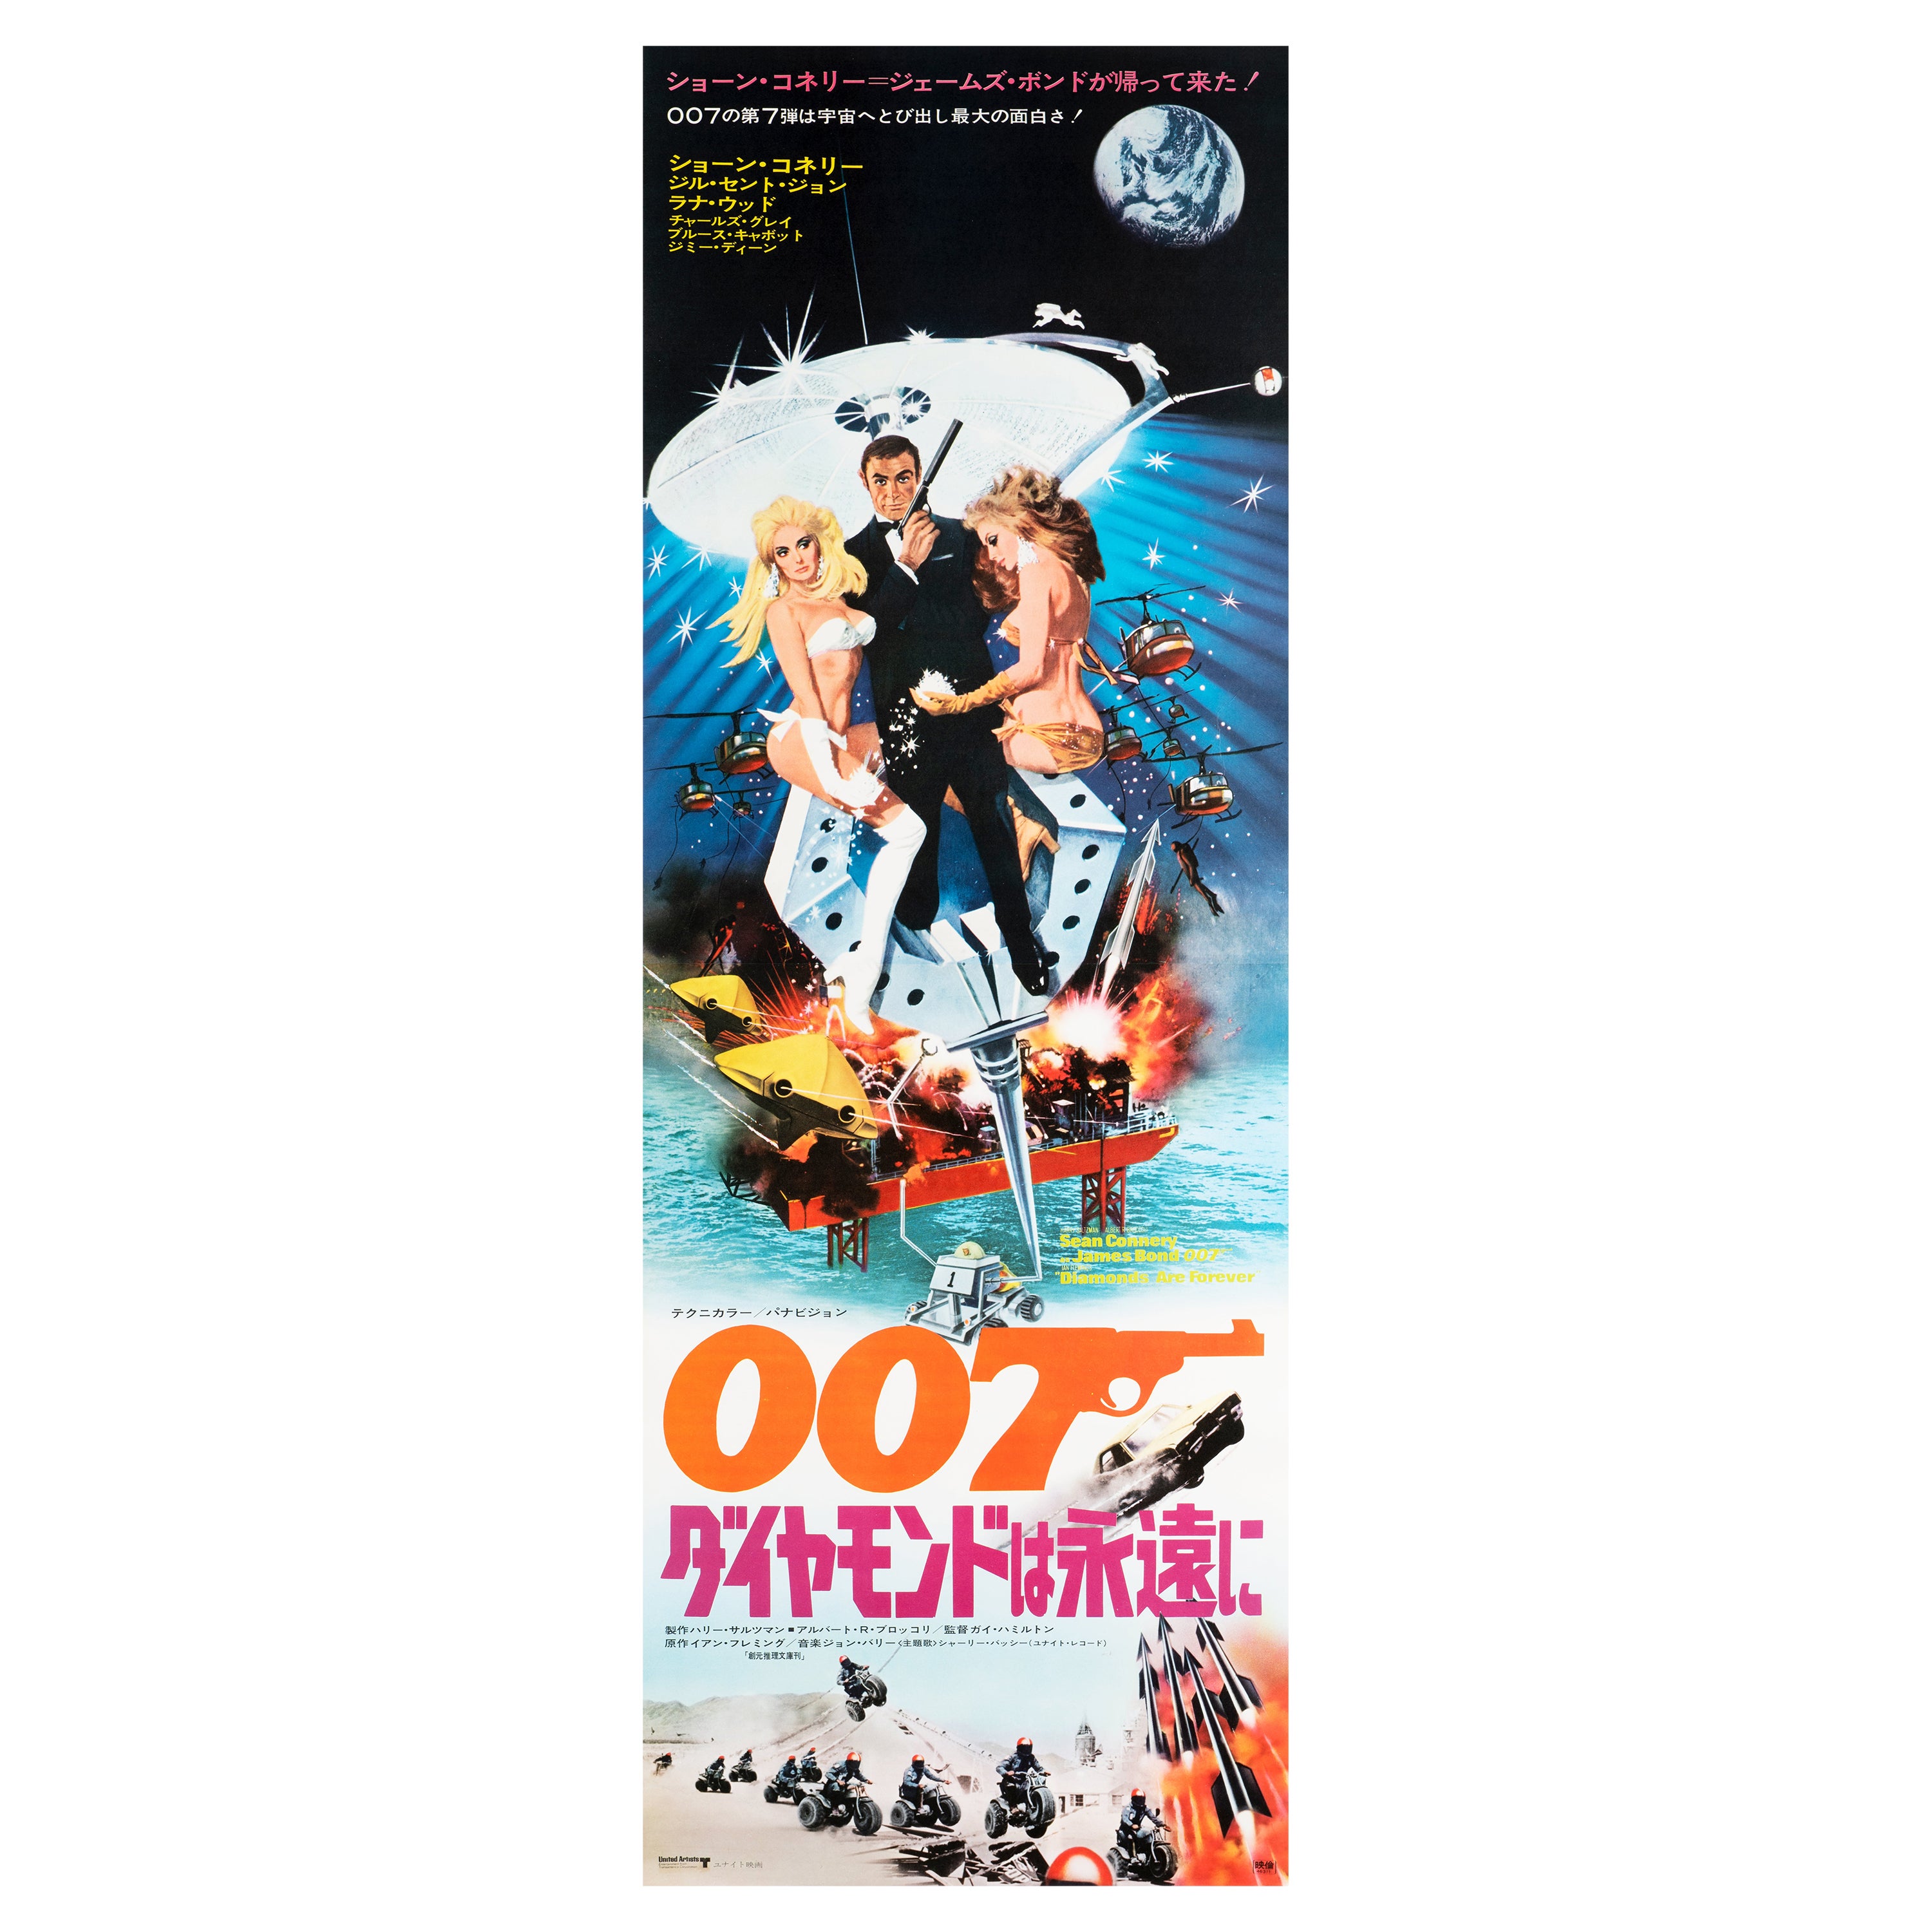 James Bond 'Diamonds Are Forever' Original Vintage Japanese Movie Poster, 1971